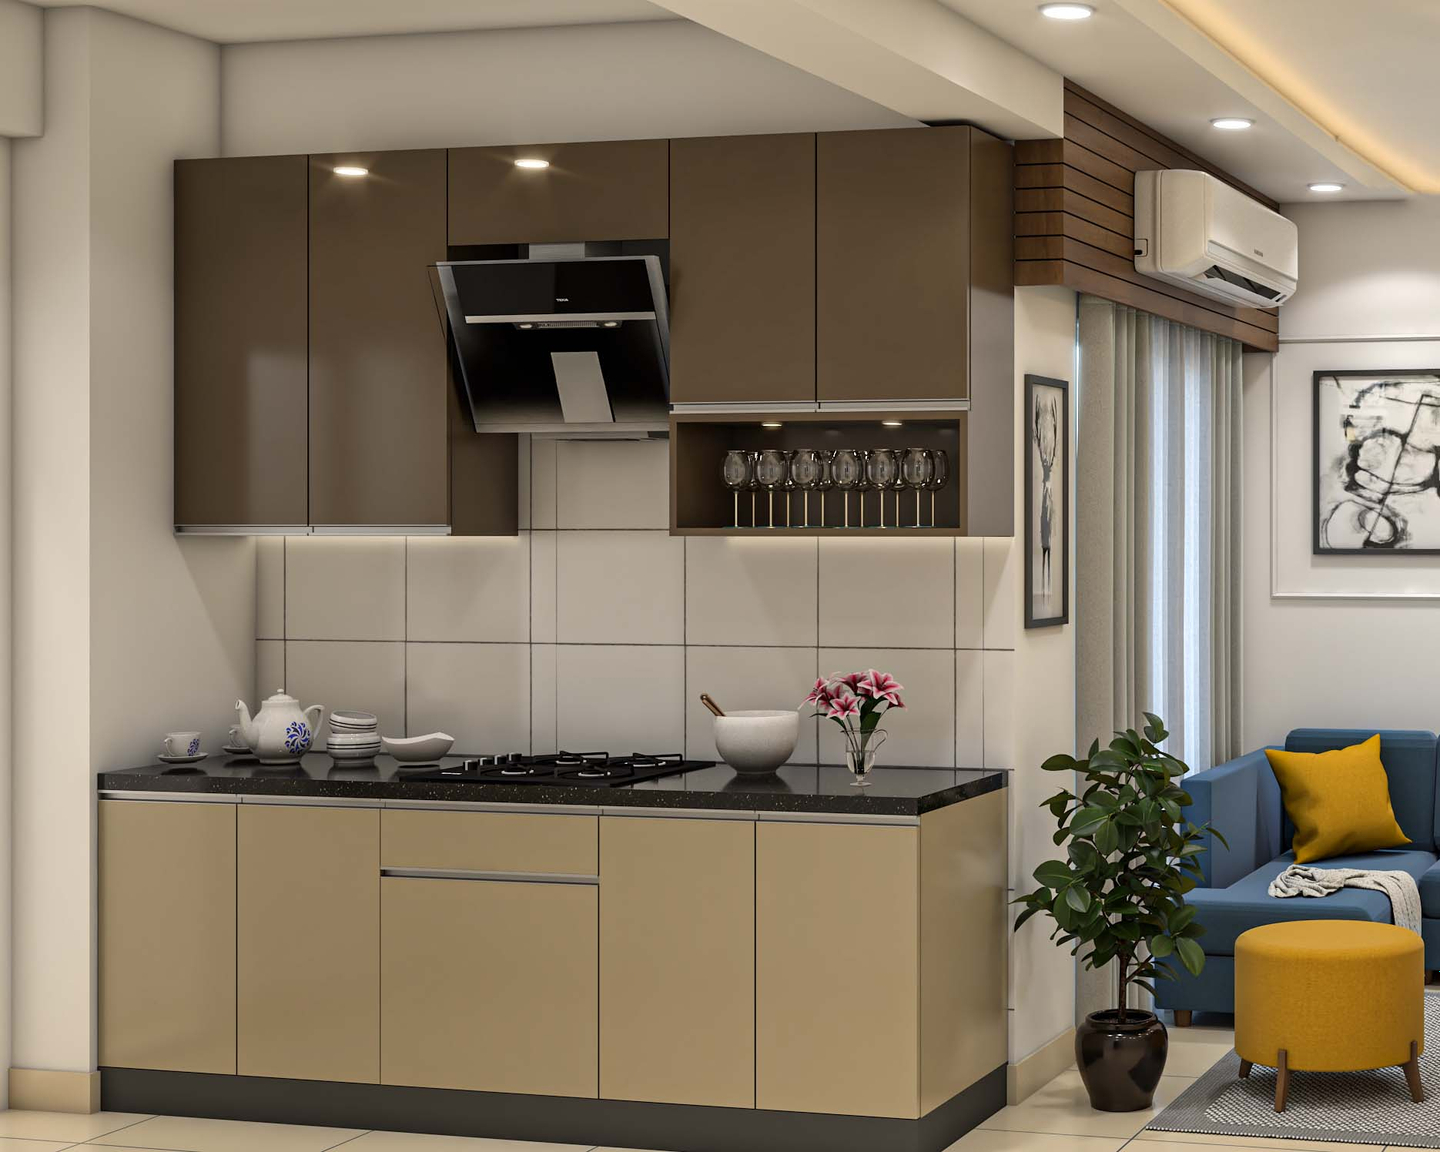 Kitchen Design With A Crockery Unit - Livspace